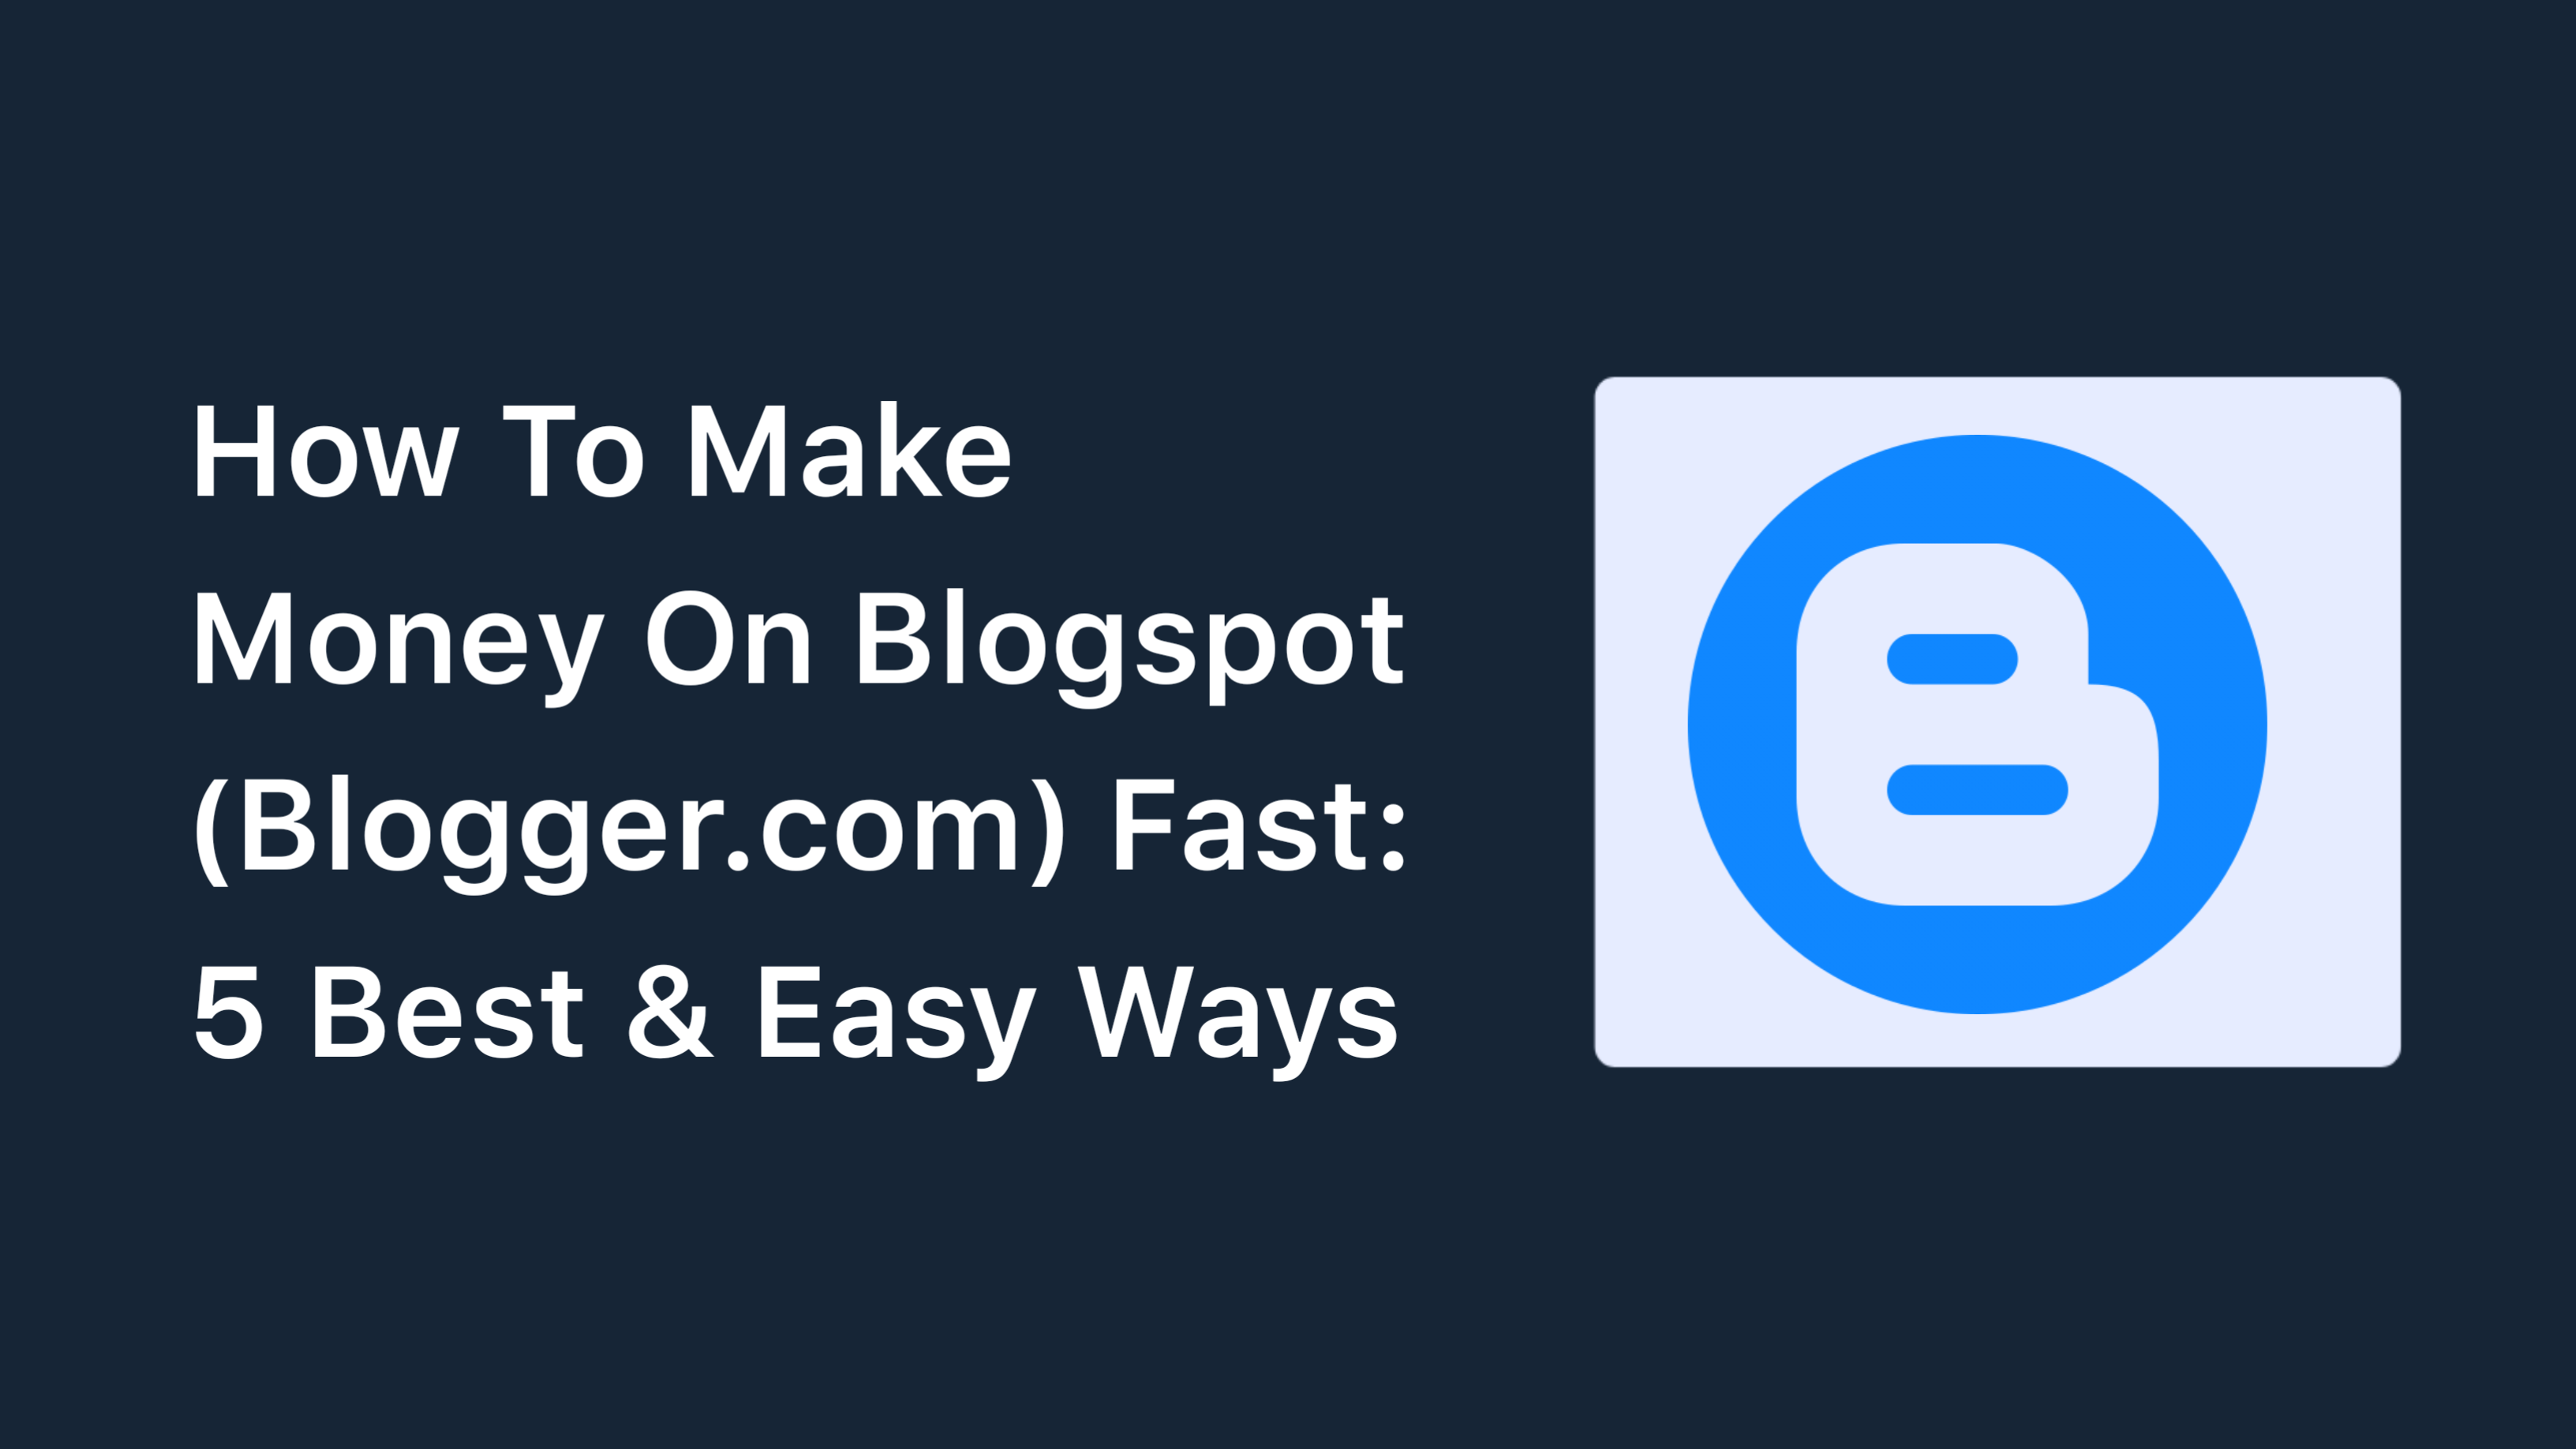 How To Make Money On Blogspot Blogger.com